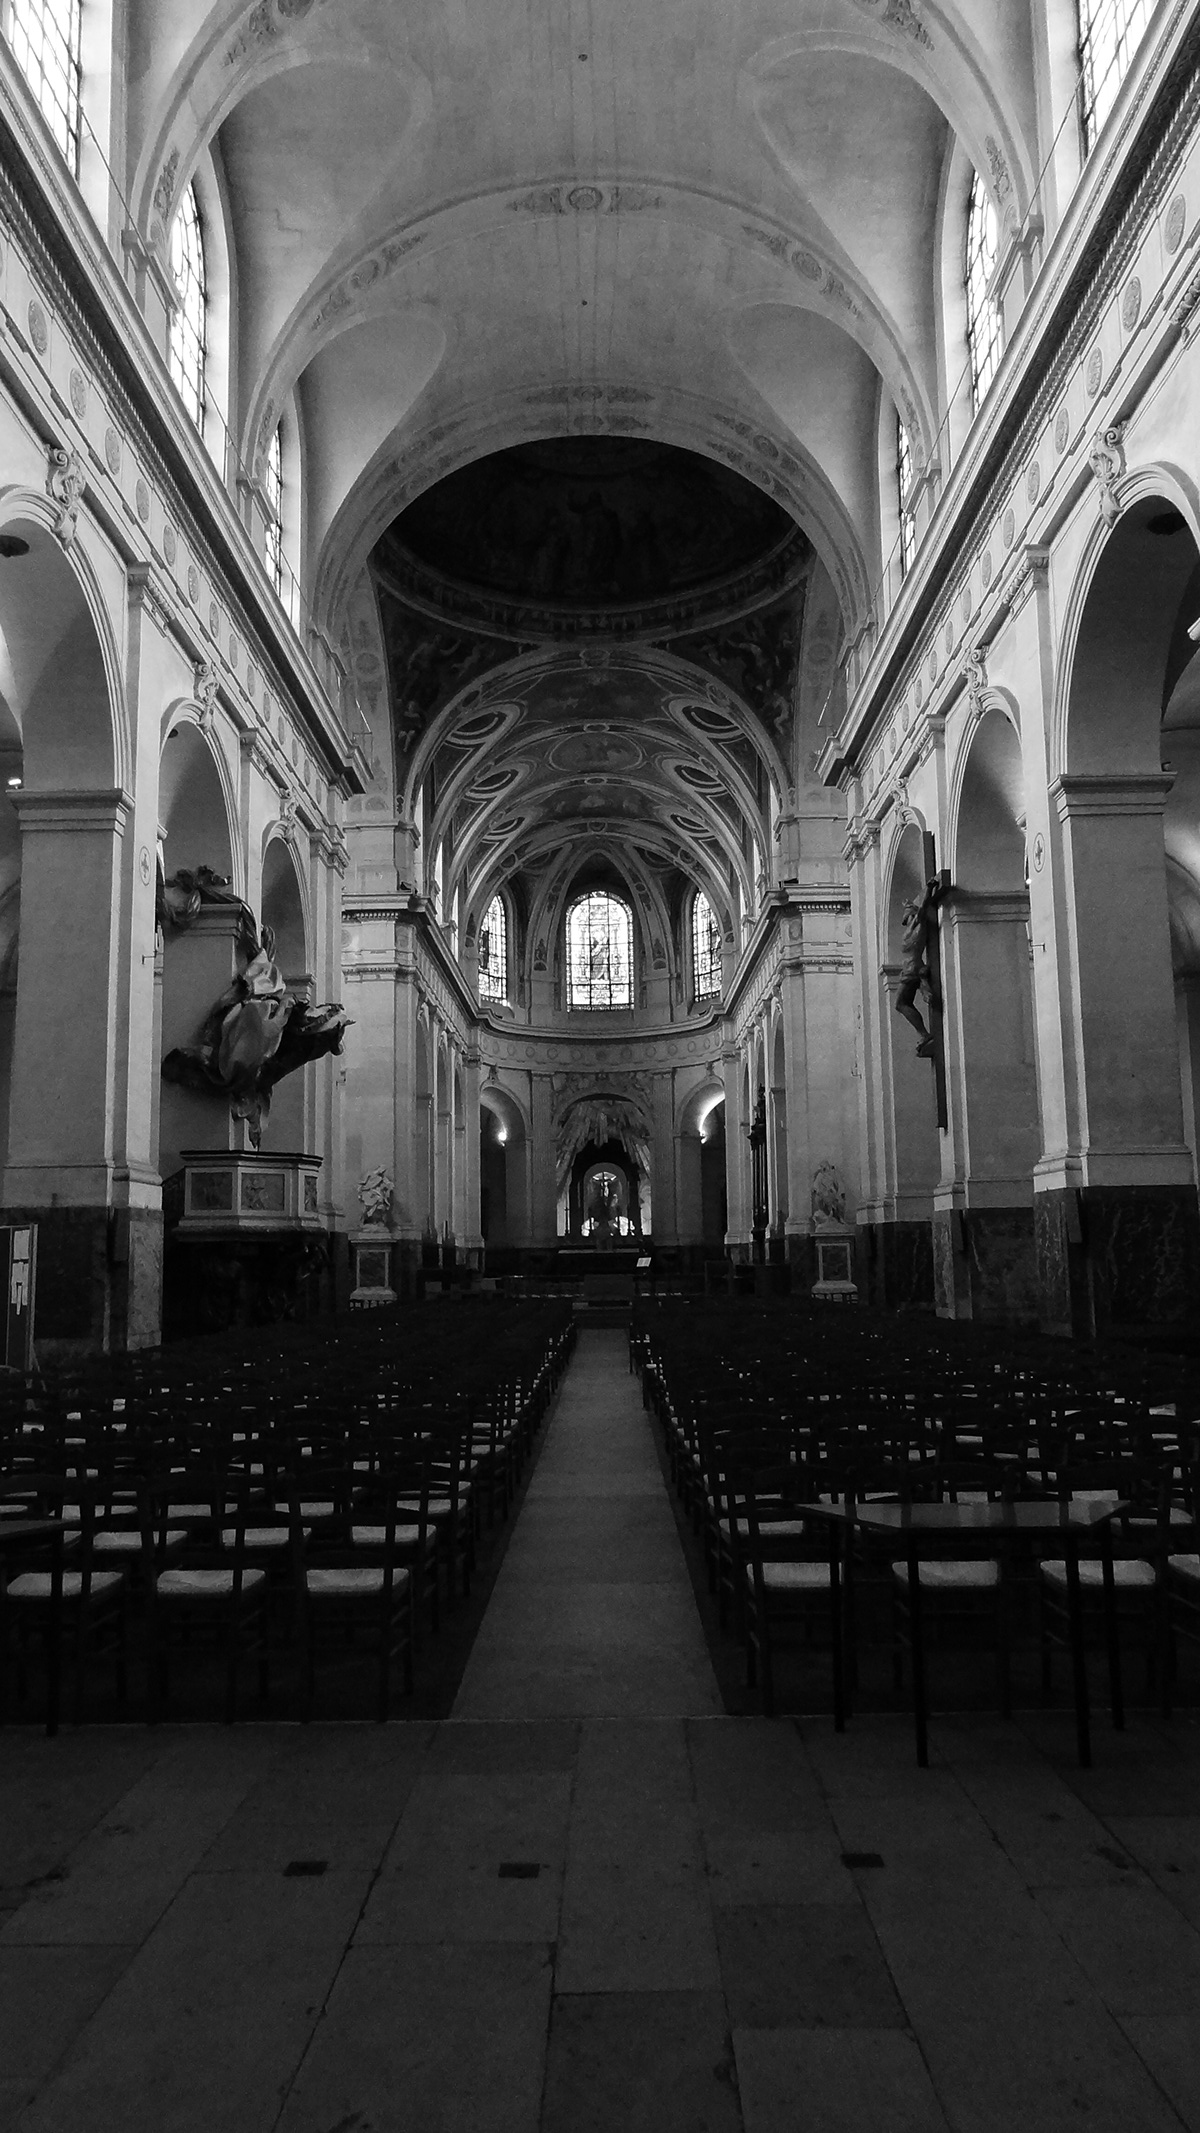 art churches Églises gothic barroque medieval art